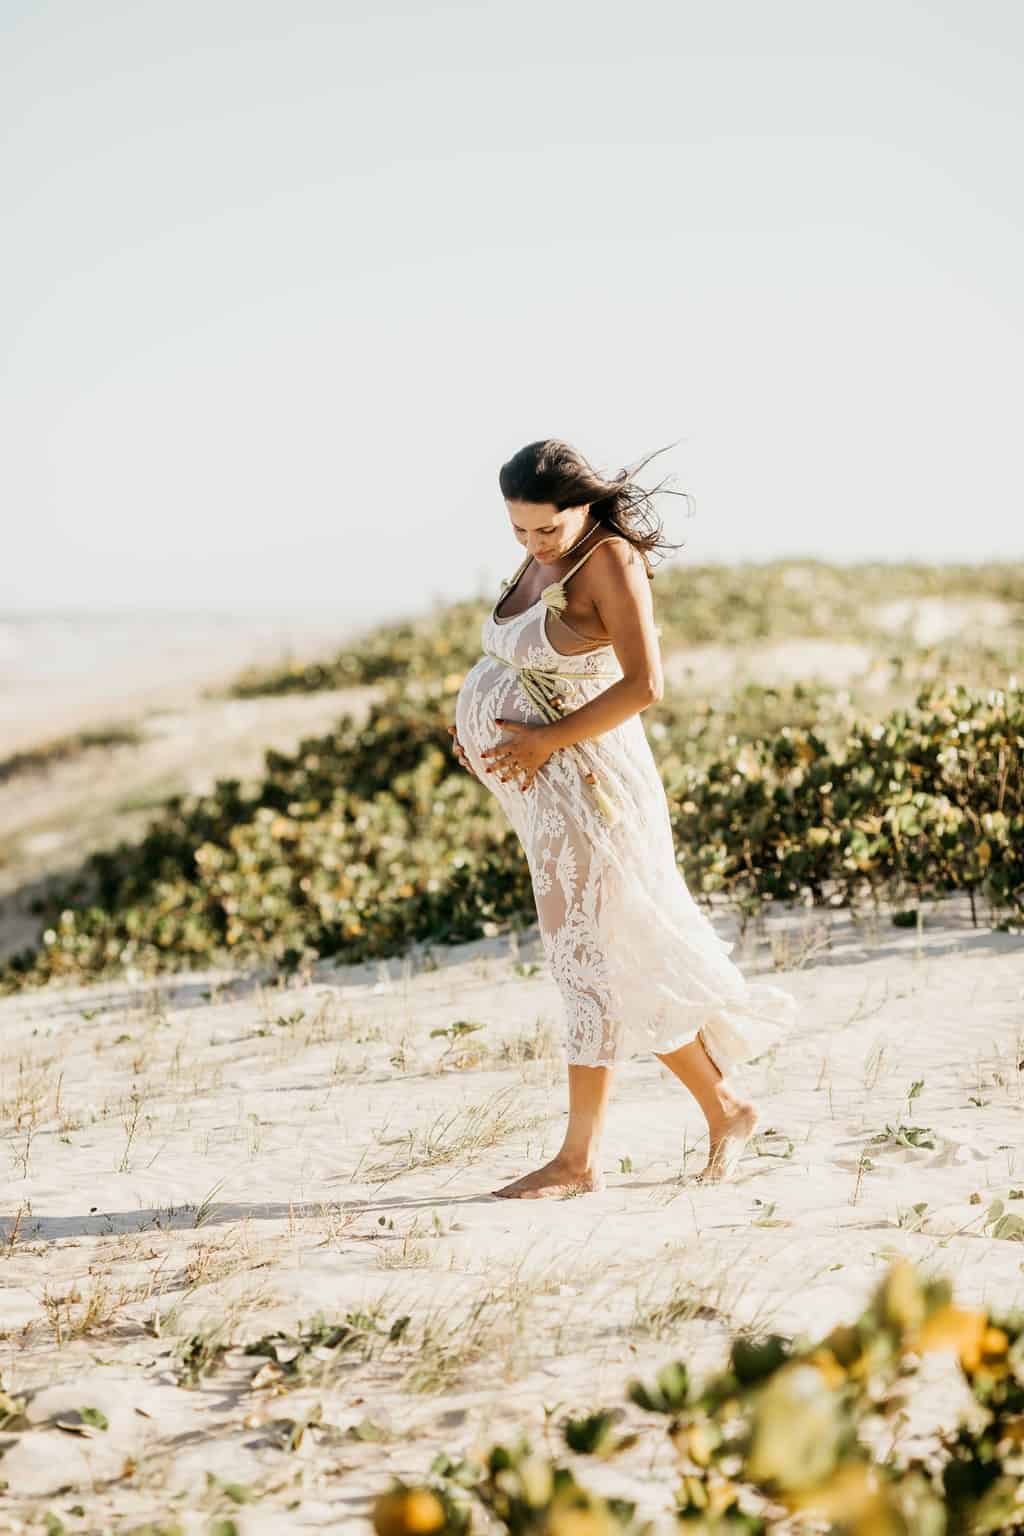 Pregnant Woman in White Dress Walking on Beach